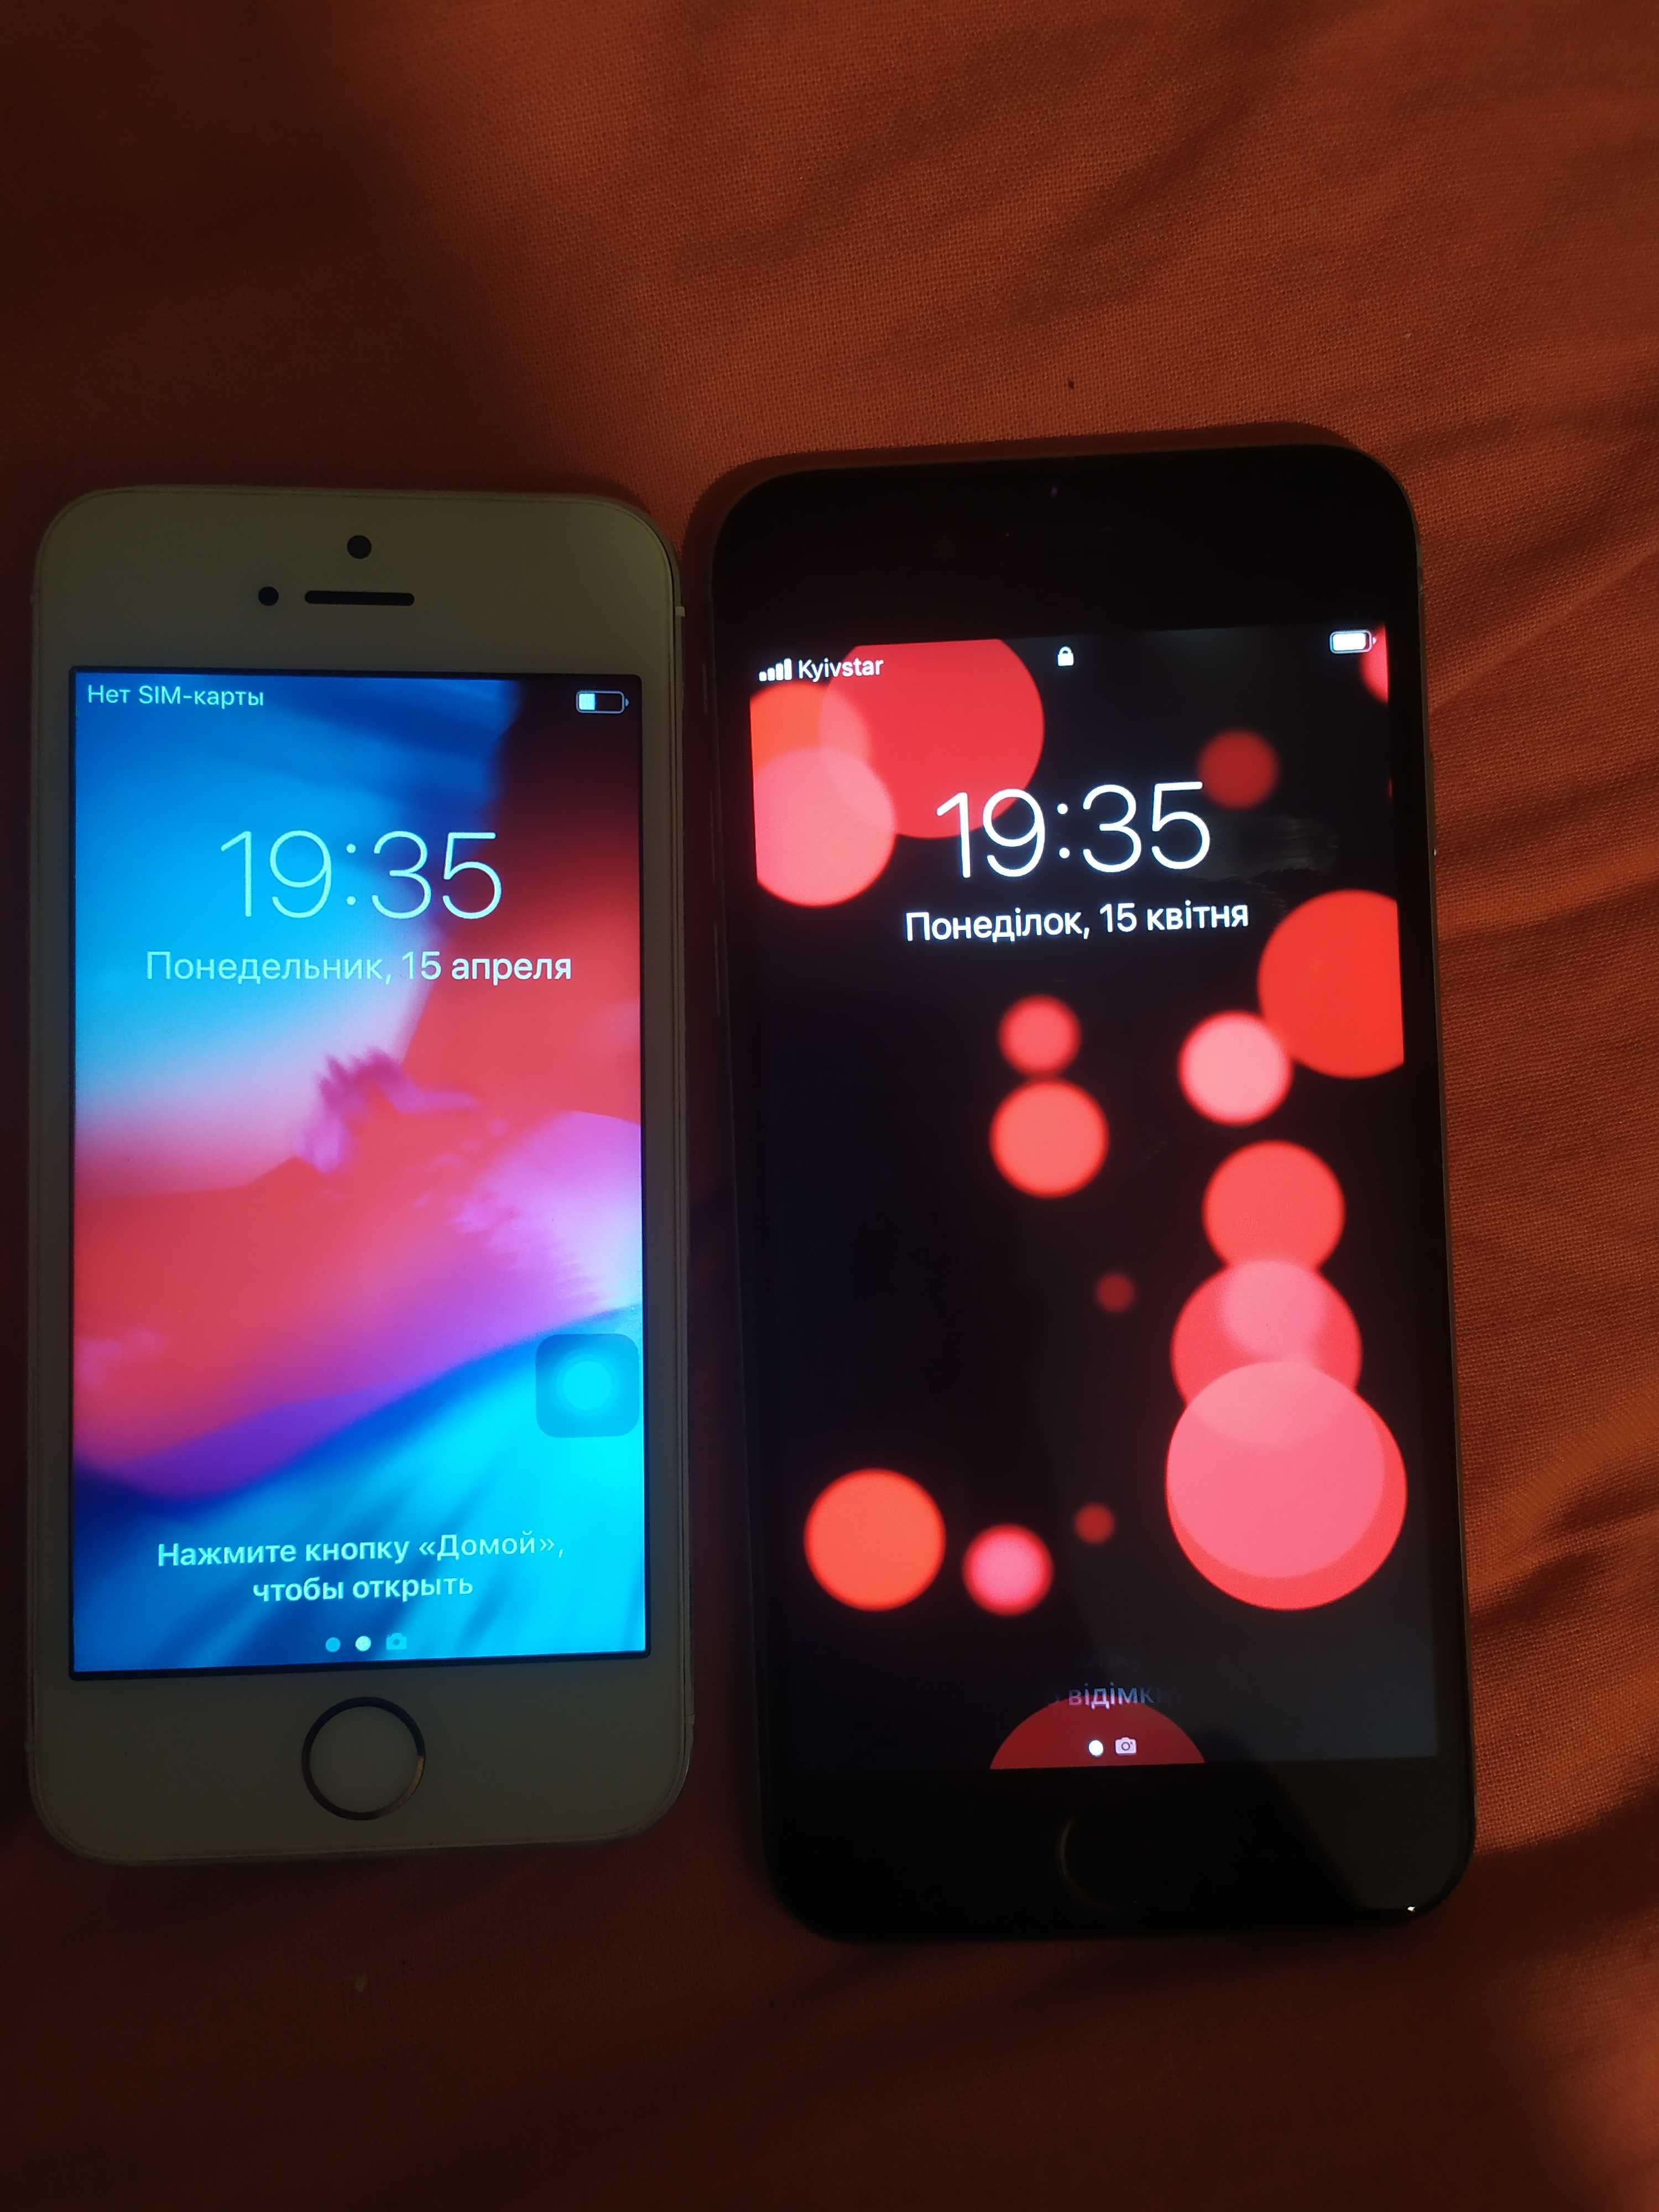 Iphone 6 s і Iphone 5s